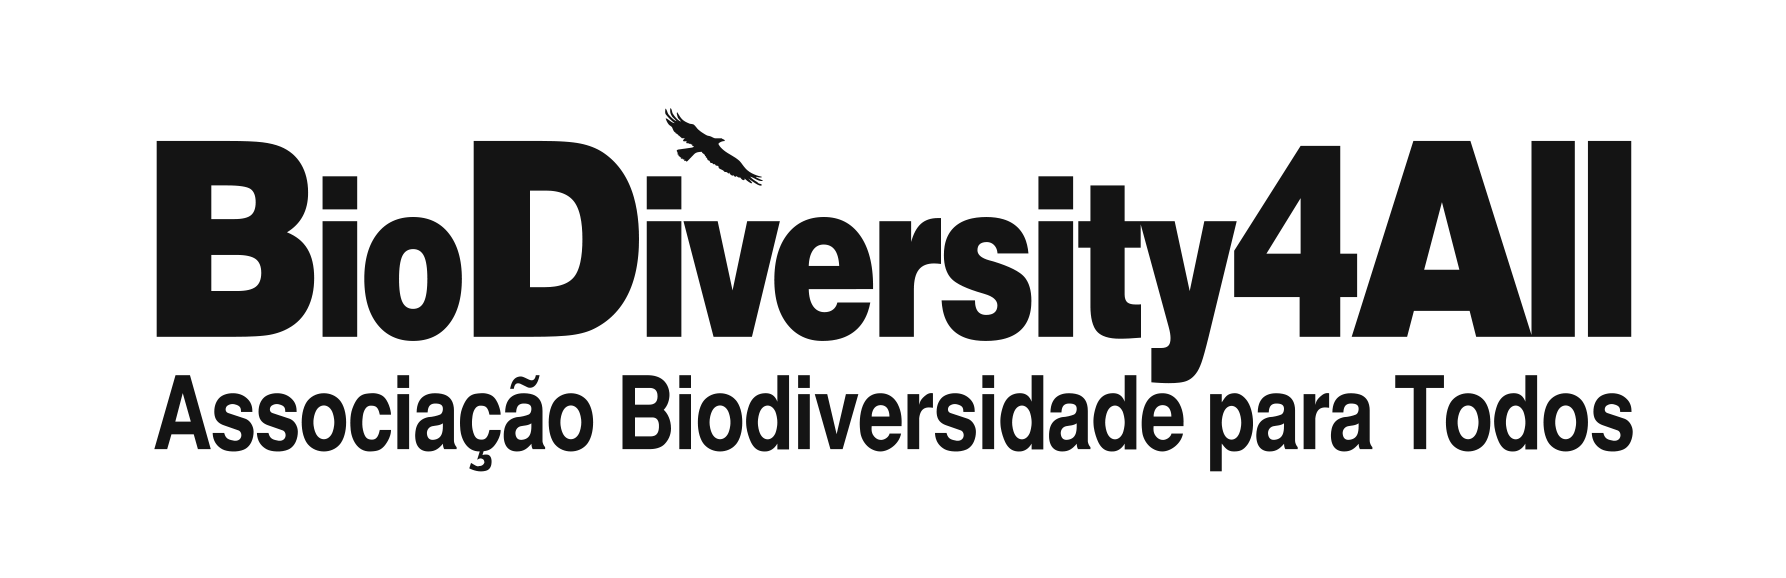 Biodiversity4All